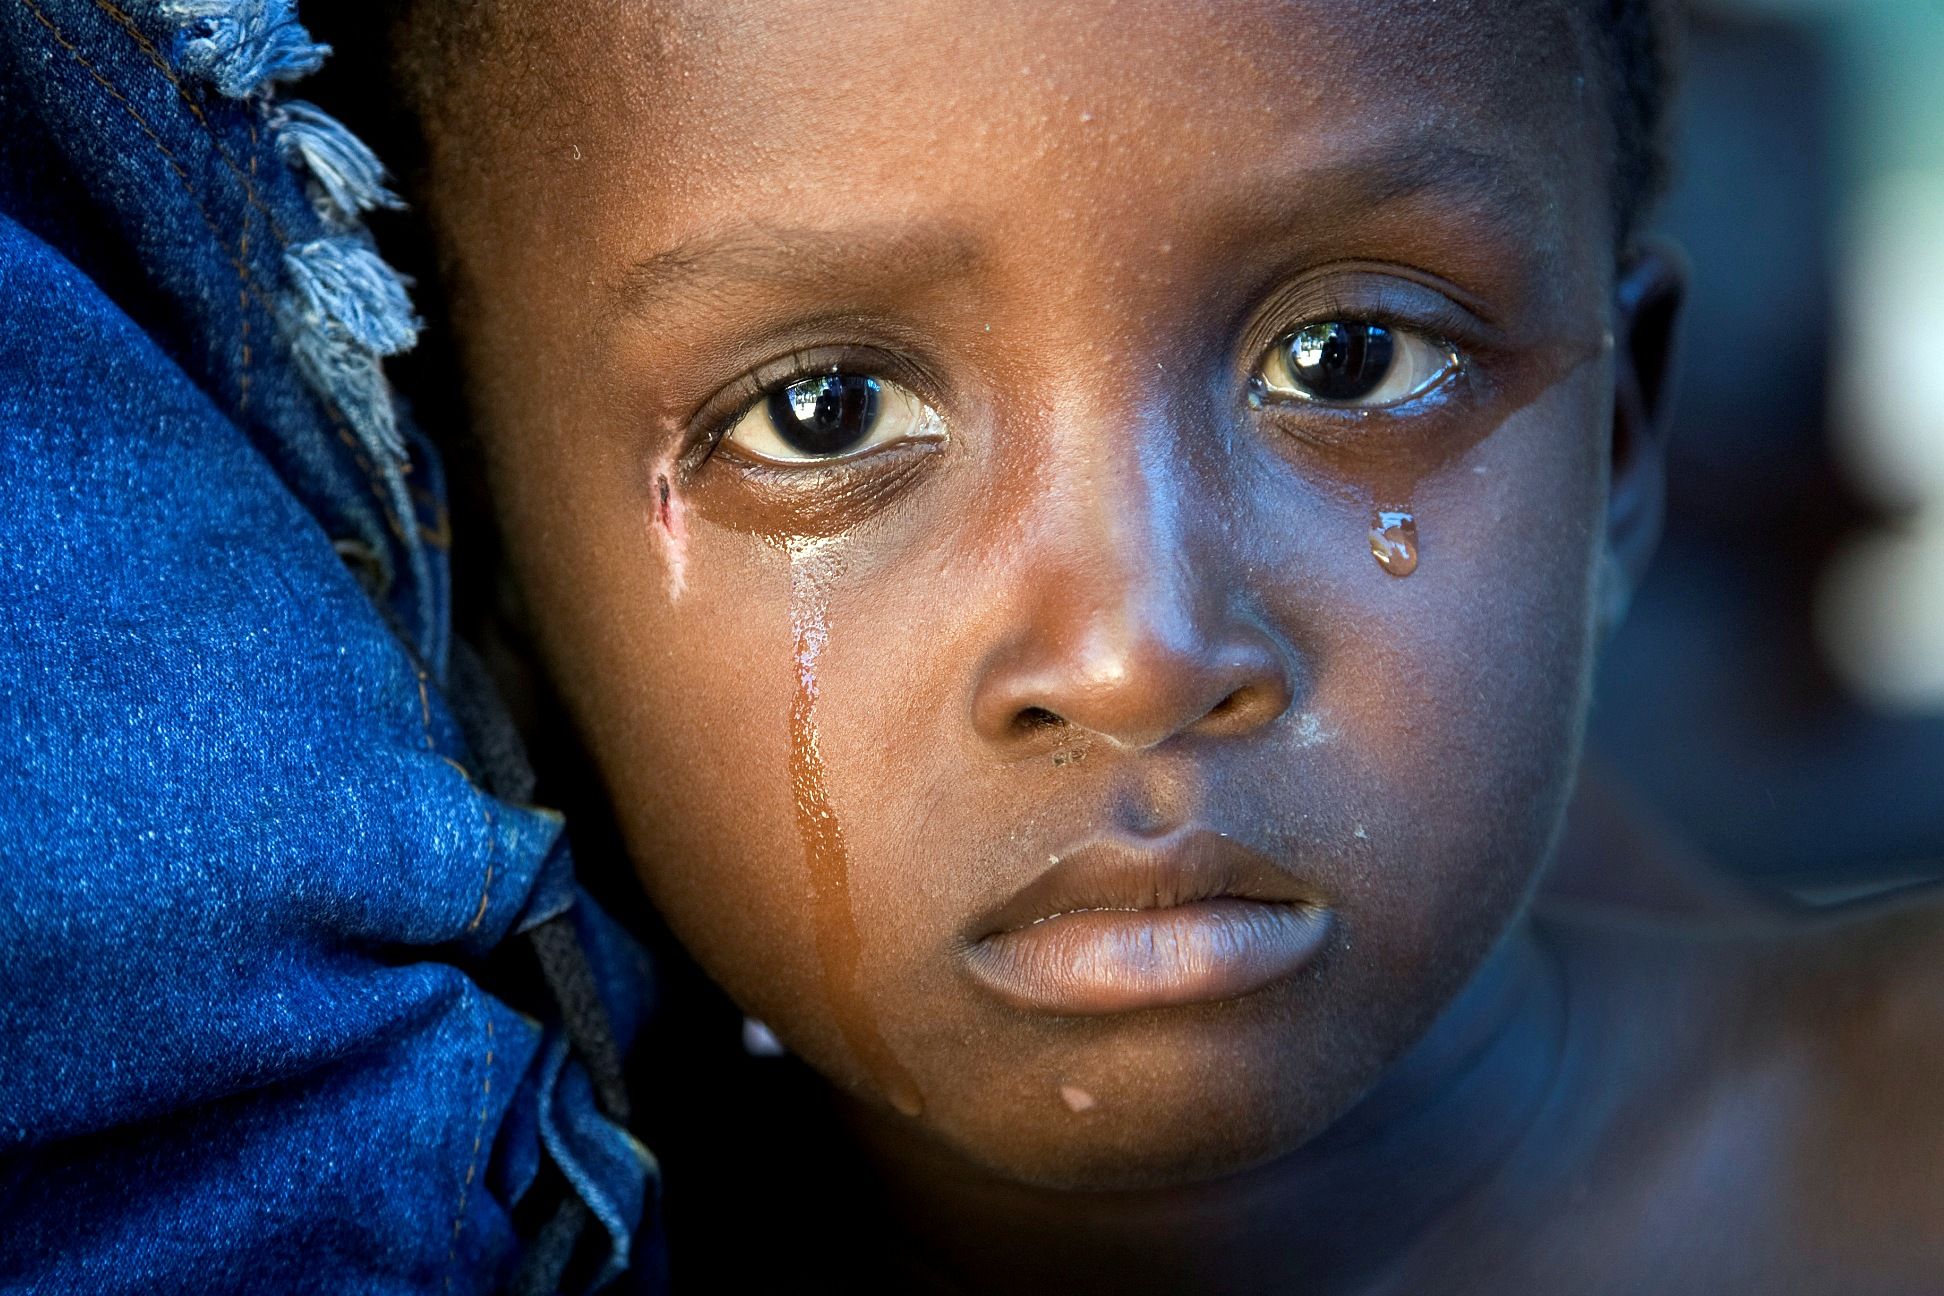 95f605a84a_enfant-triste-malade-cholera-haiti_United_Nations_Photos-fotopedia-cc-by-nc-nd-20